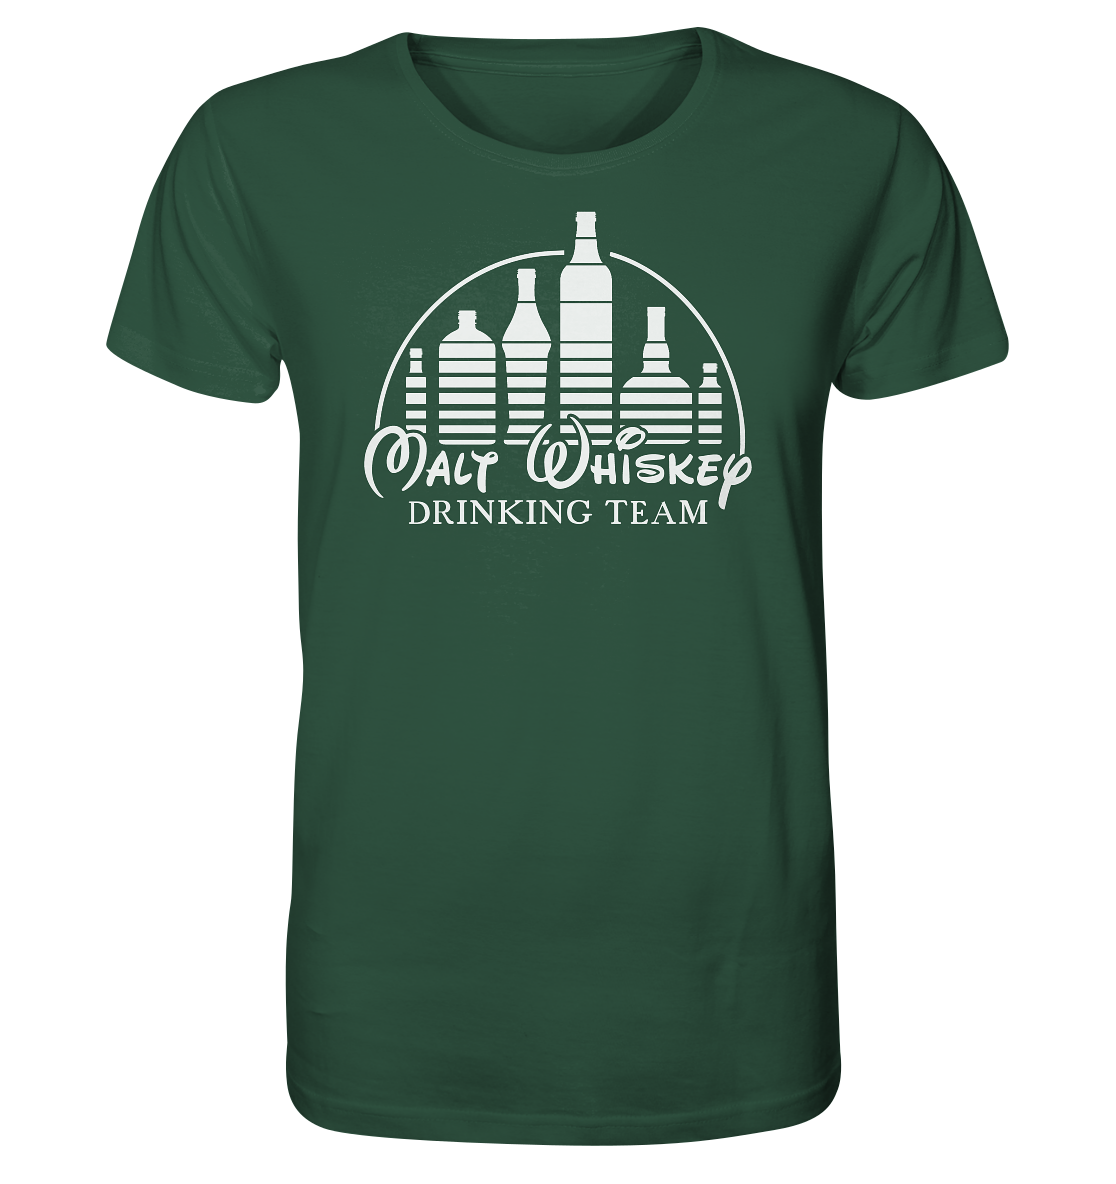 Malt Whiskey "Drinking Team" - Organic Shirt